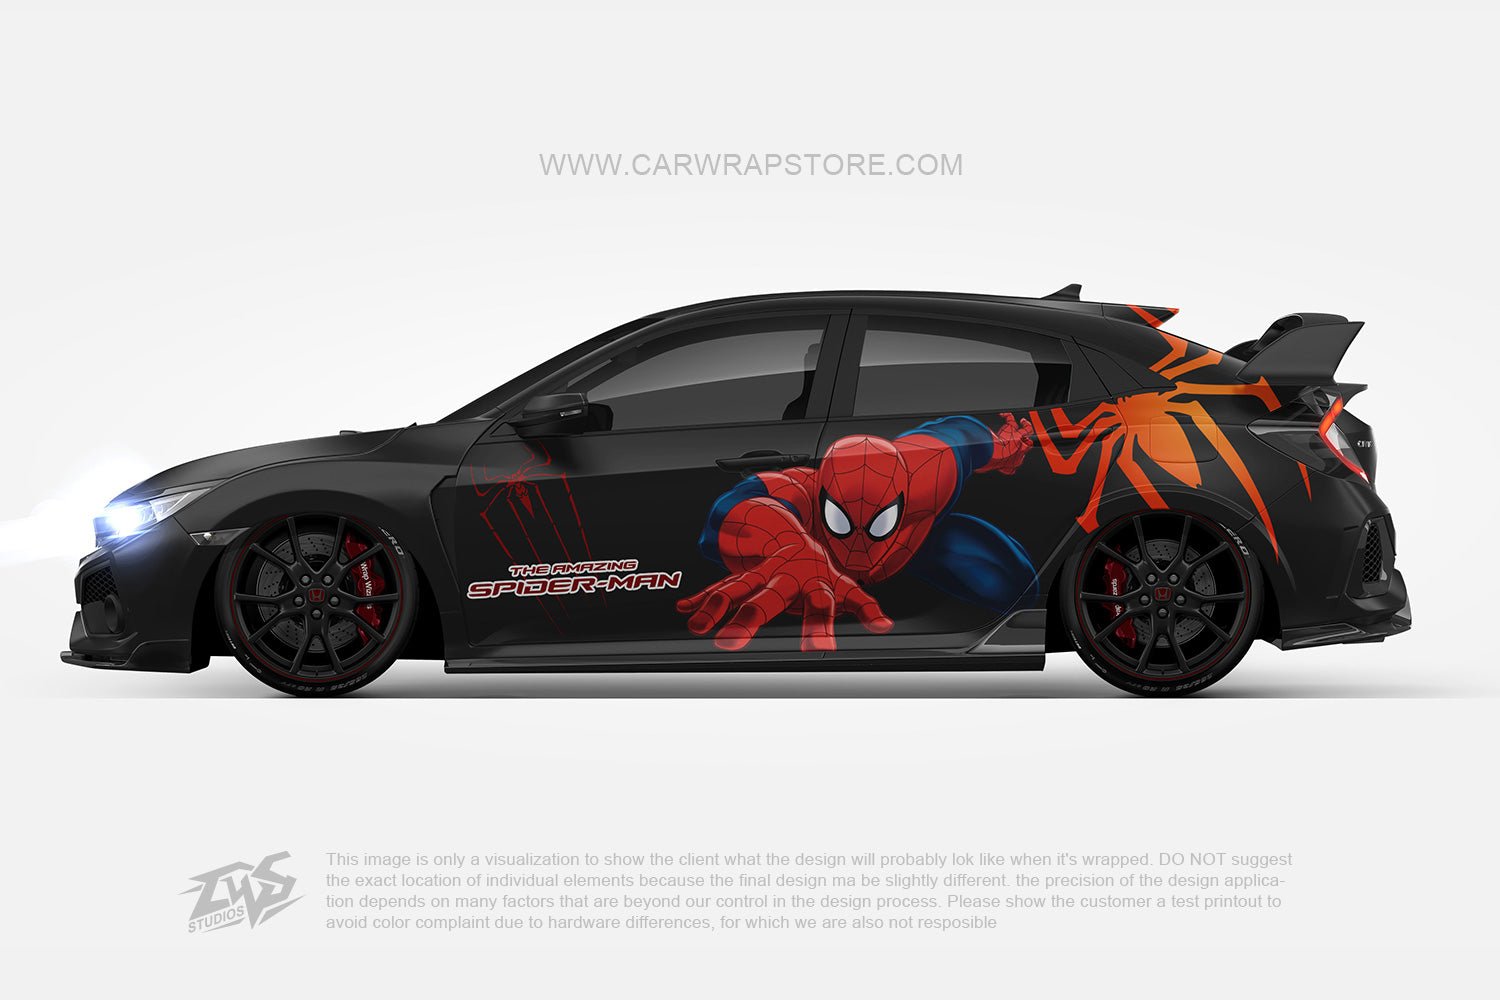 Spiderman【SP-12】 - Car Wrap Store